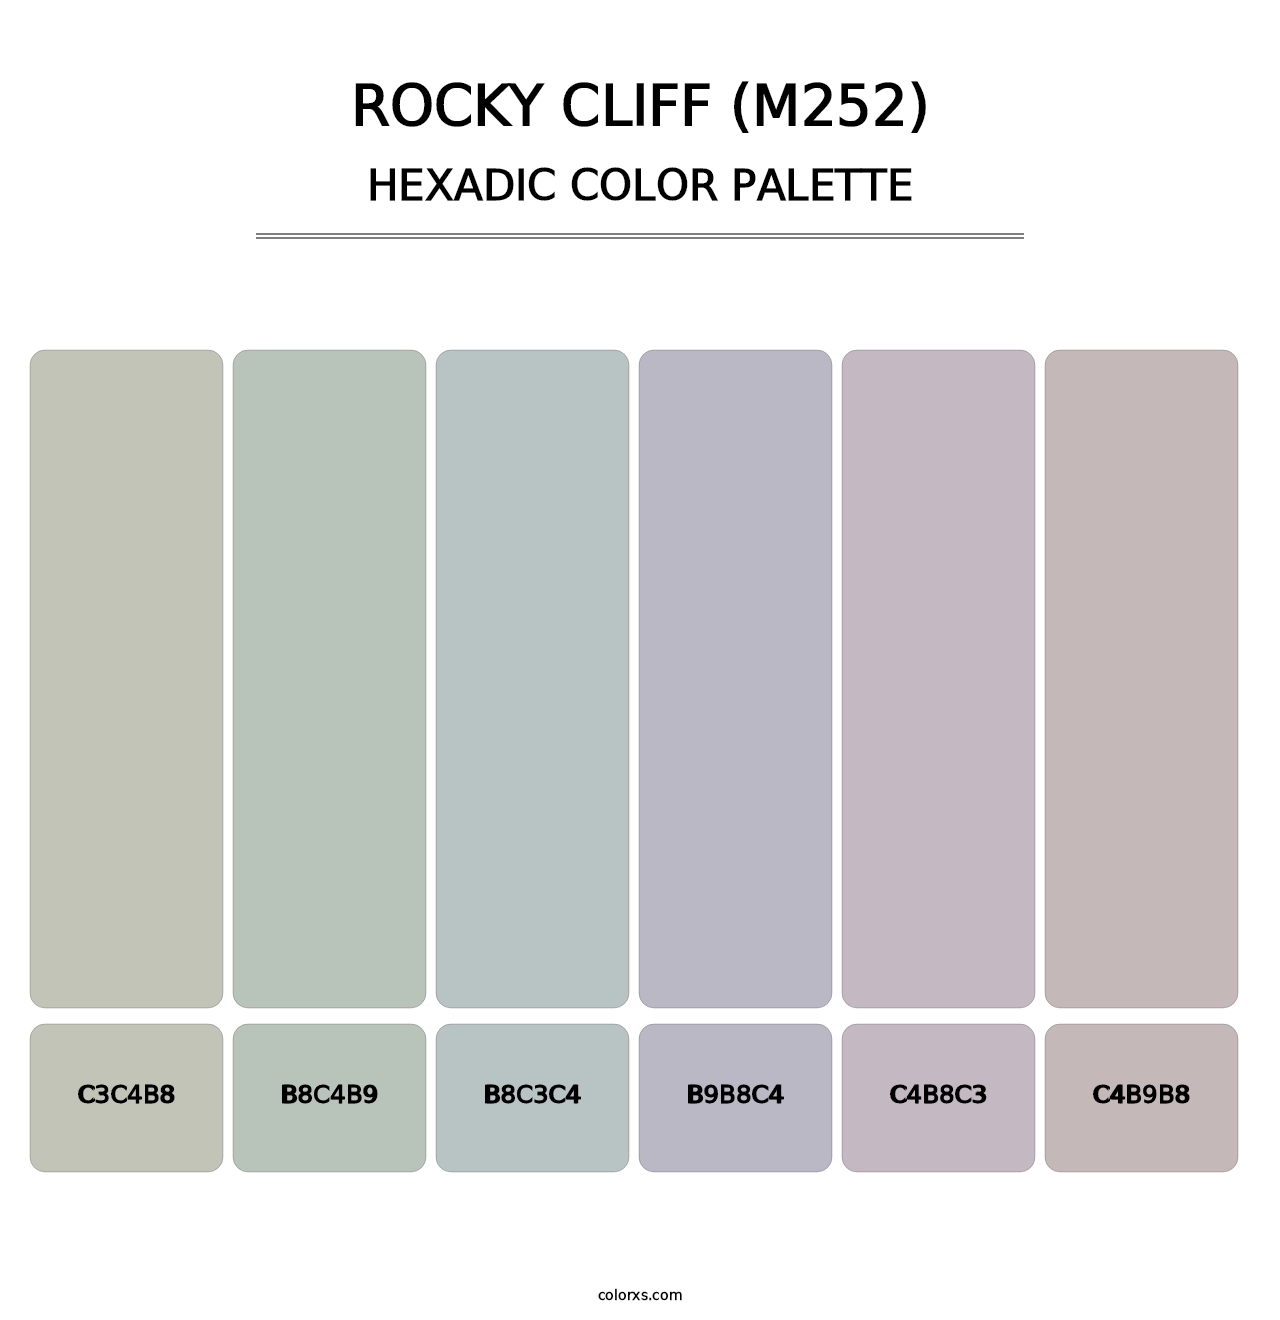 Rocky Cliff (M252) - Hexadic Color Palette